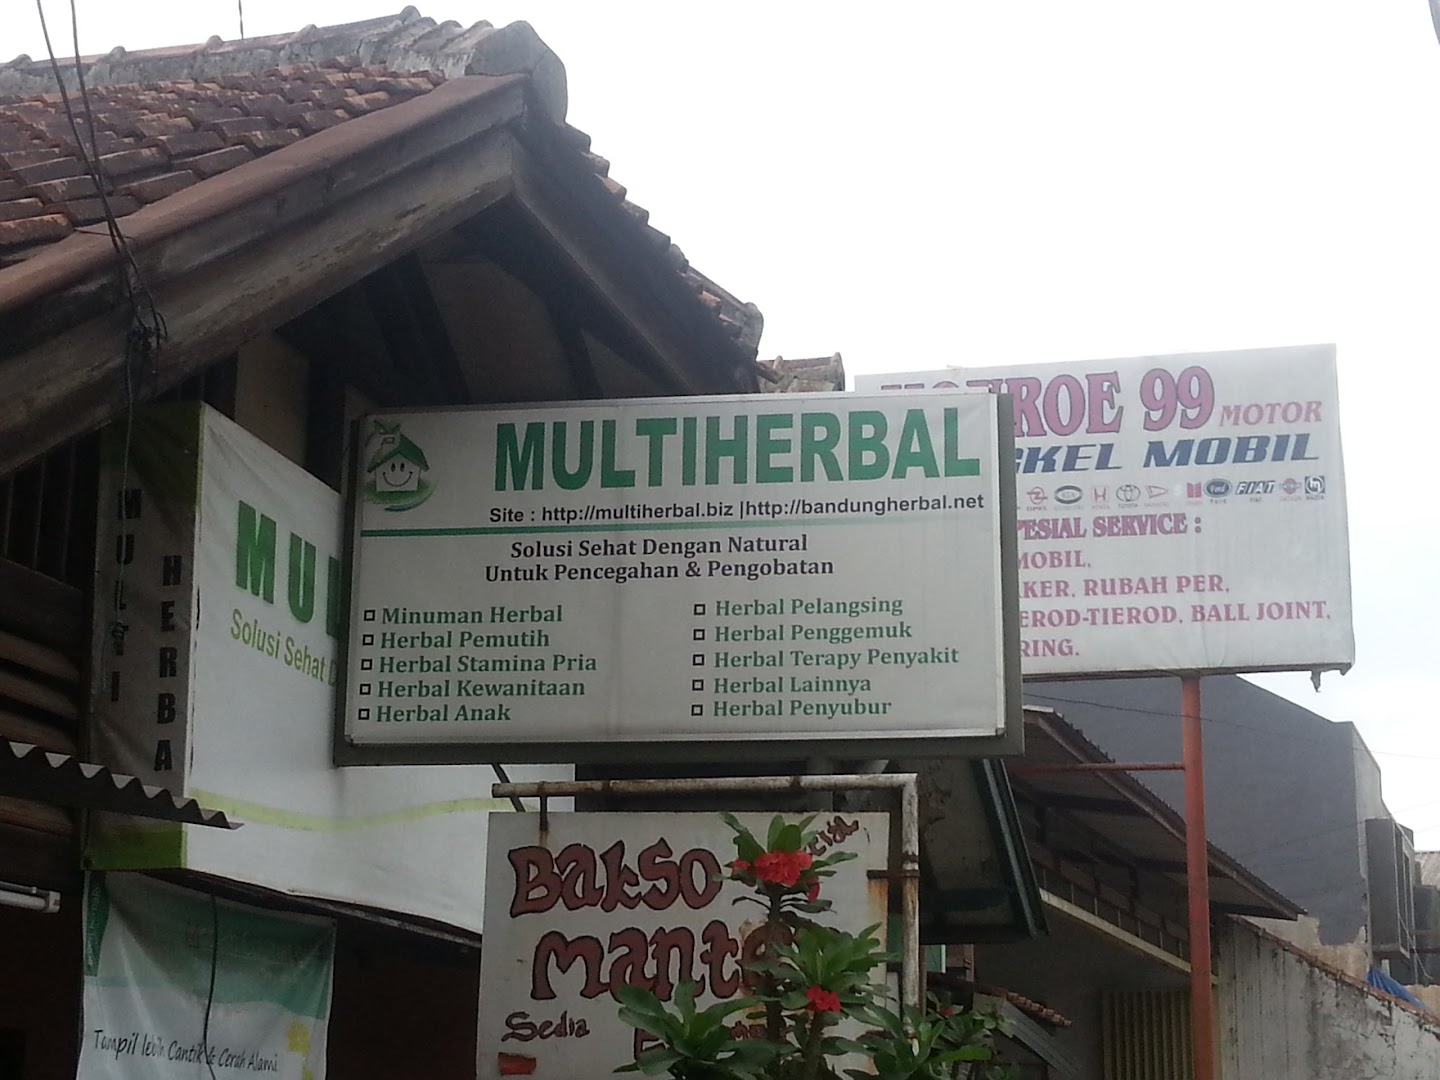 Multiherbal.id - Madu Bajakah Borneo, Madu Hijau, Madu Gurah Almahera, Madu Angkak, Qusthul Hindi Dan Herbal Lainnya Photo